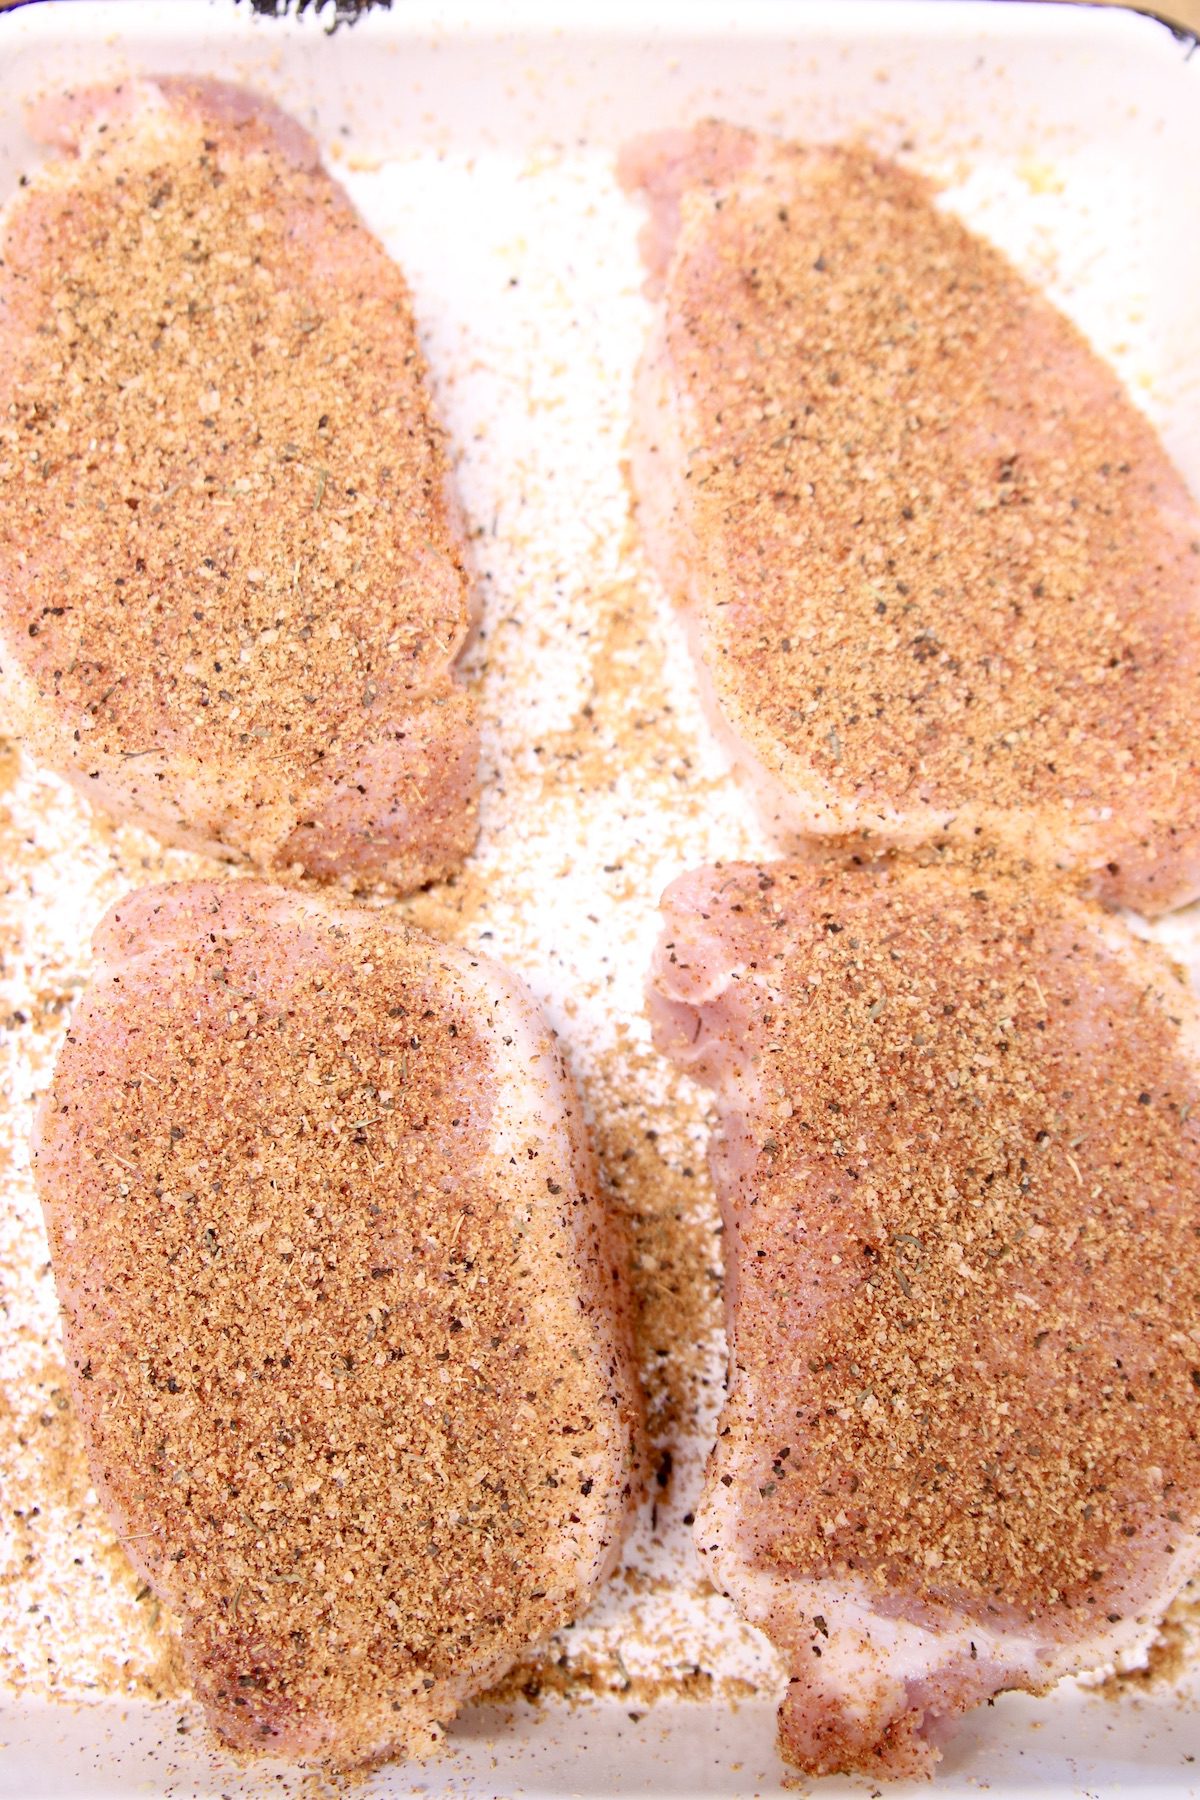 4 boneless pork chops on a sheet pan with dry rub seasoning - raw